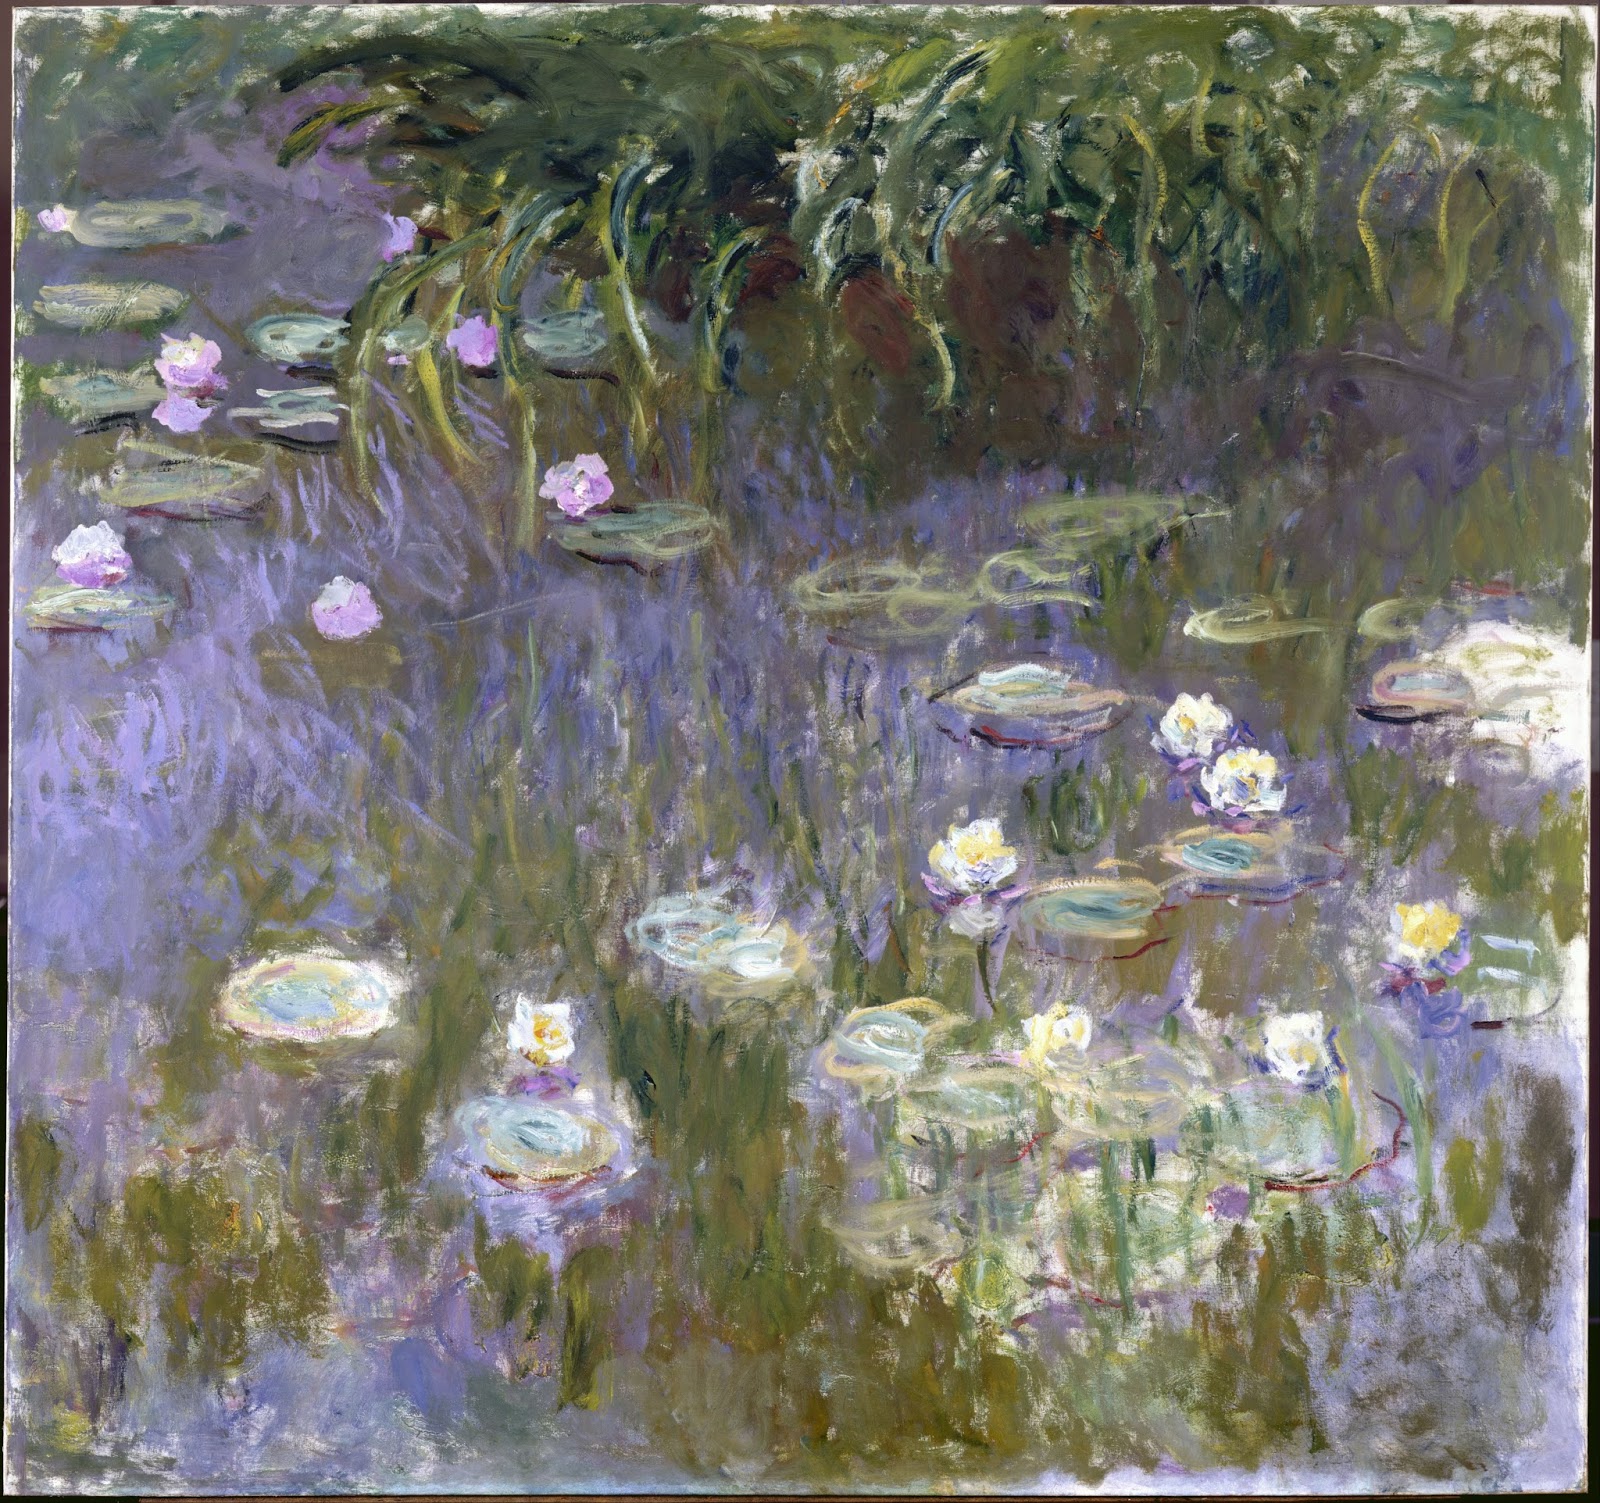 Claude+Monet-1840-1926 (550).jpg